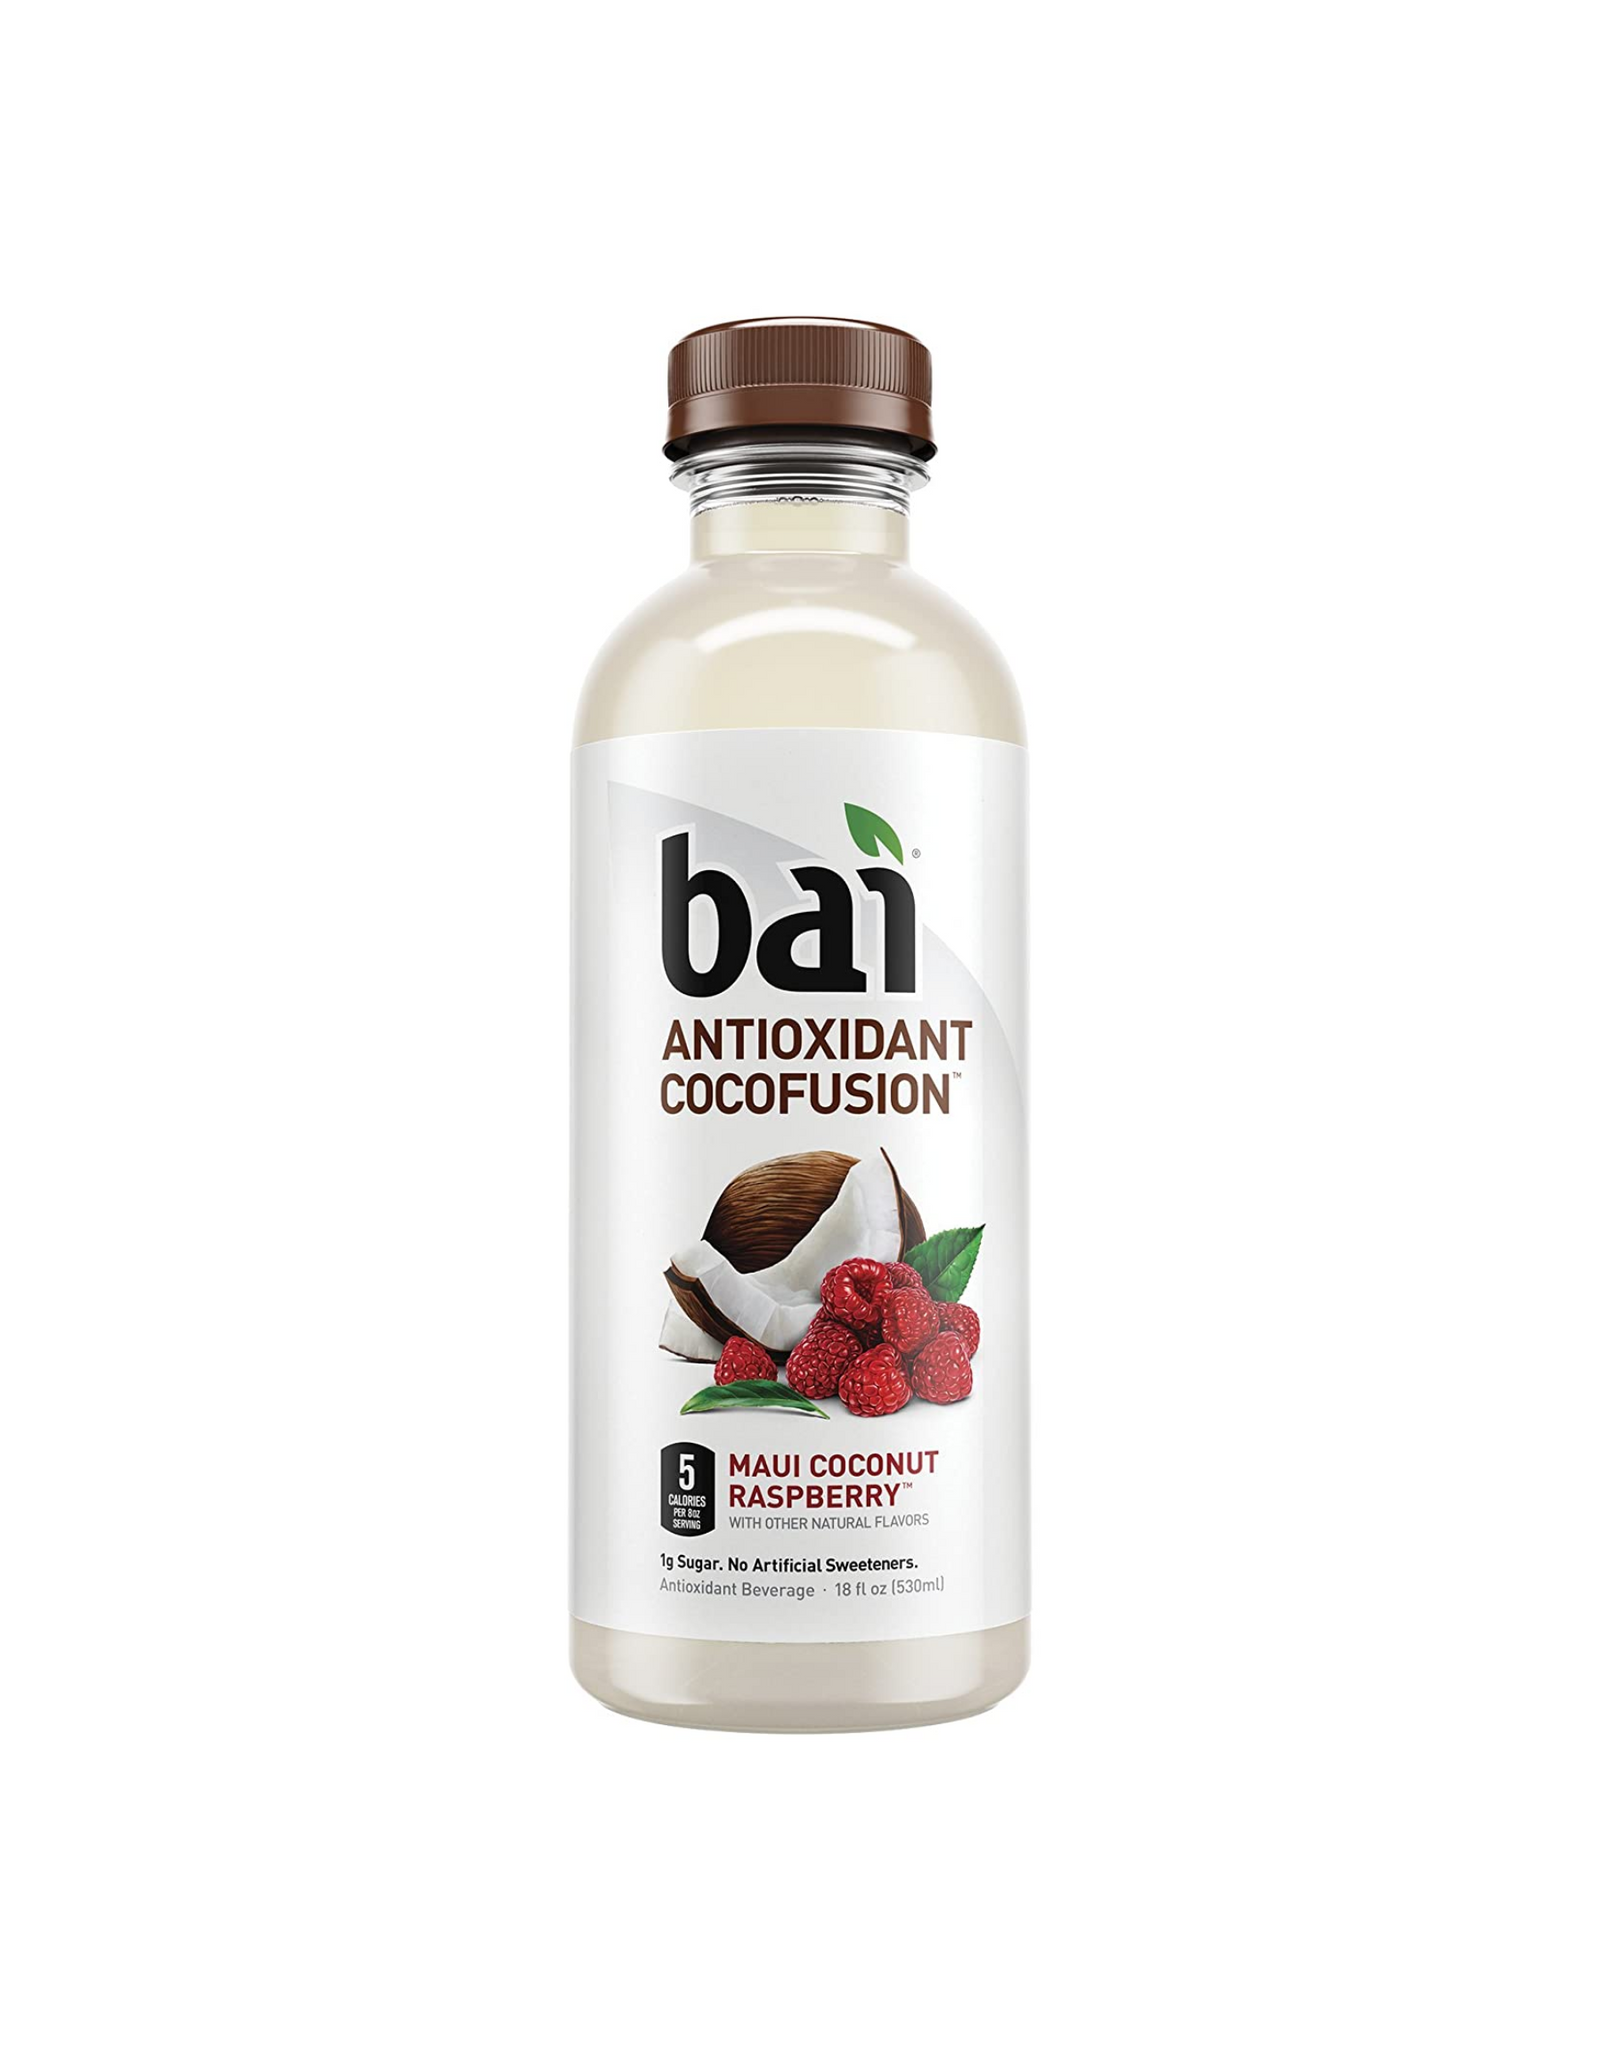 Bai Coconut Flavored Water, Antioxidant Cocofusion, Maui Coconut Raspberry, 18 fl oz (Pack of 12)